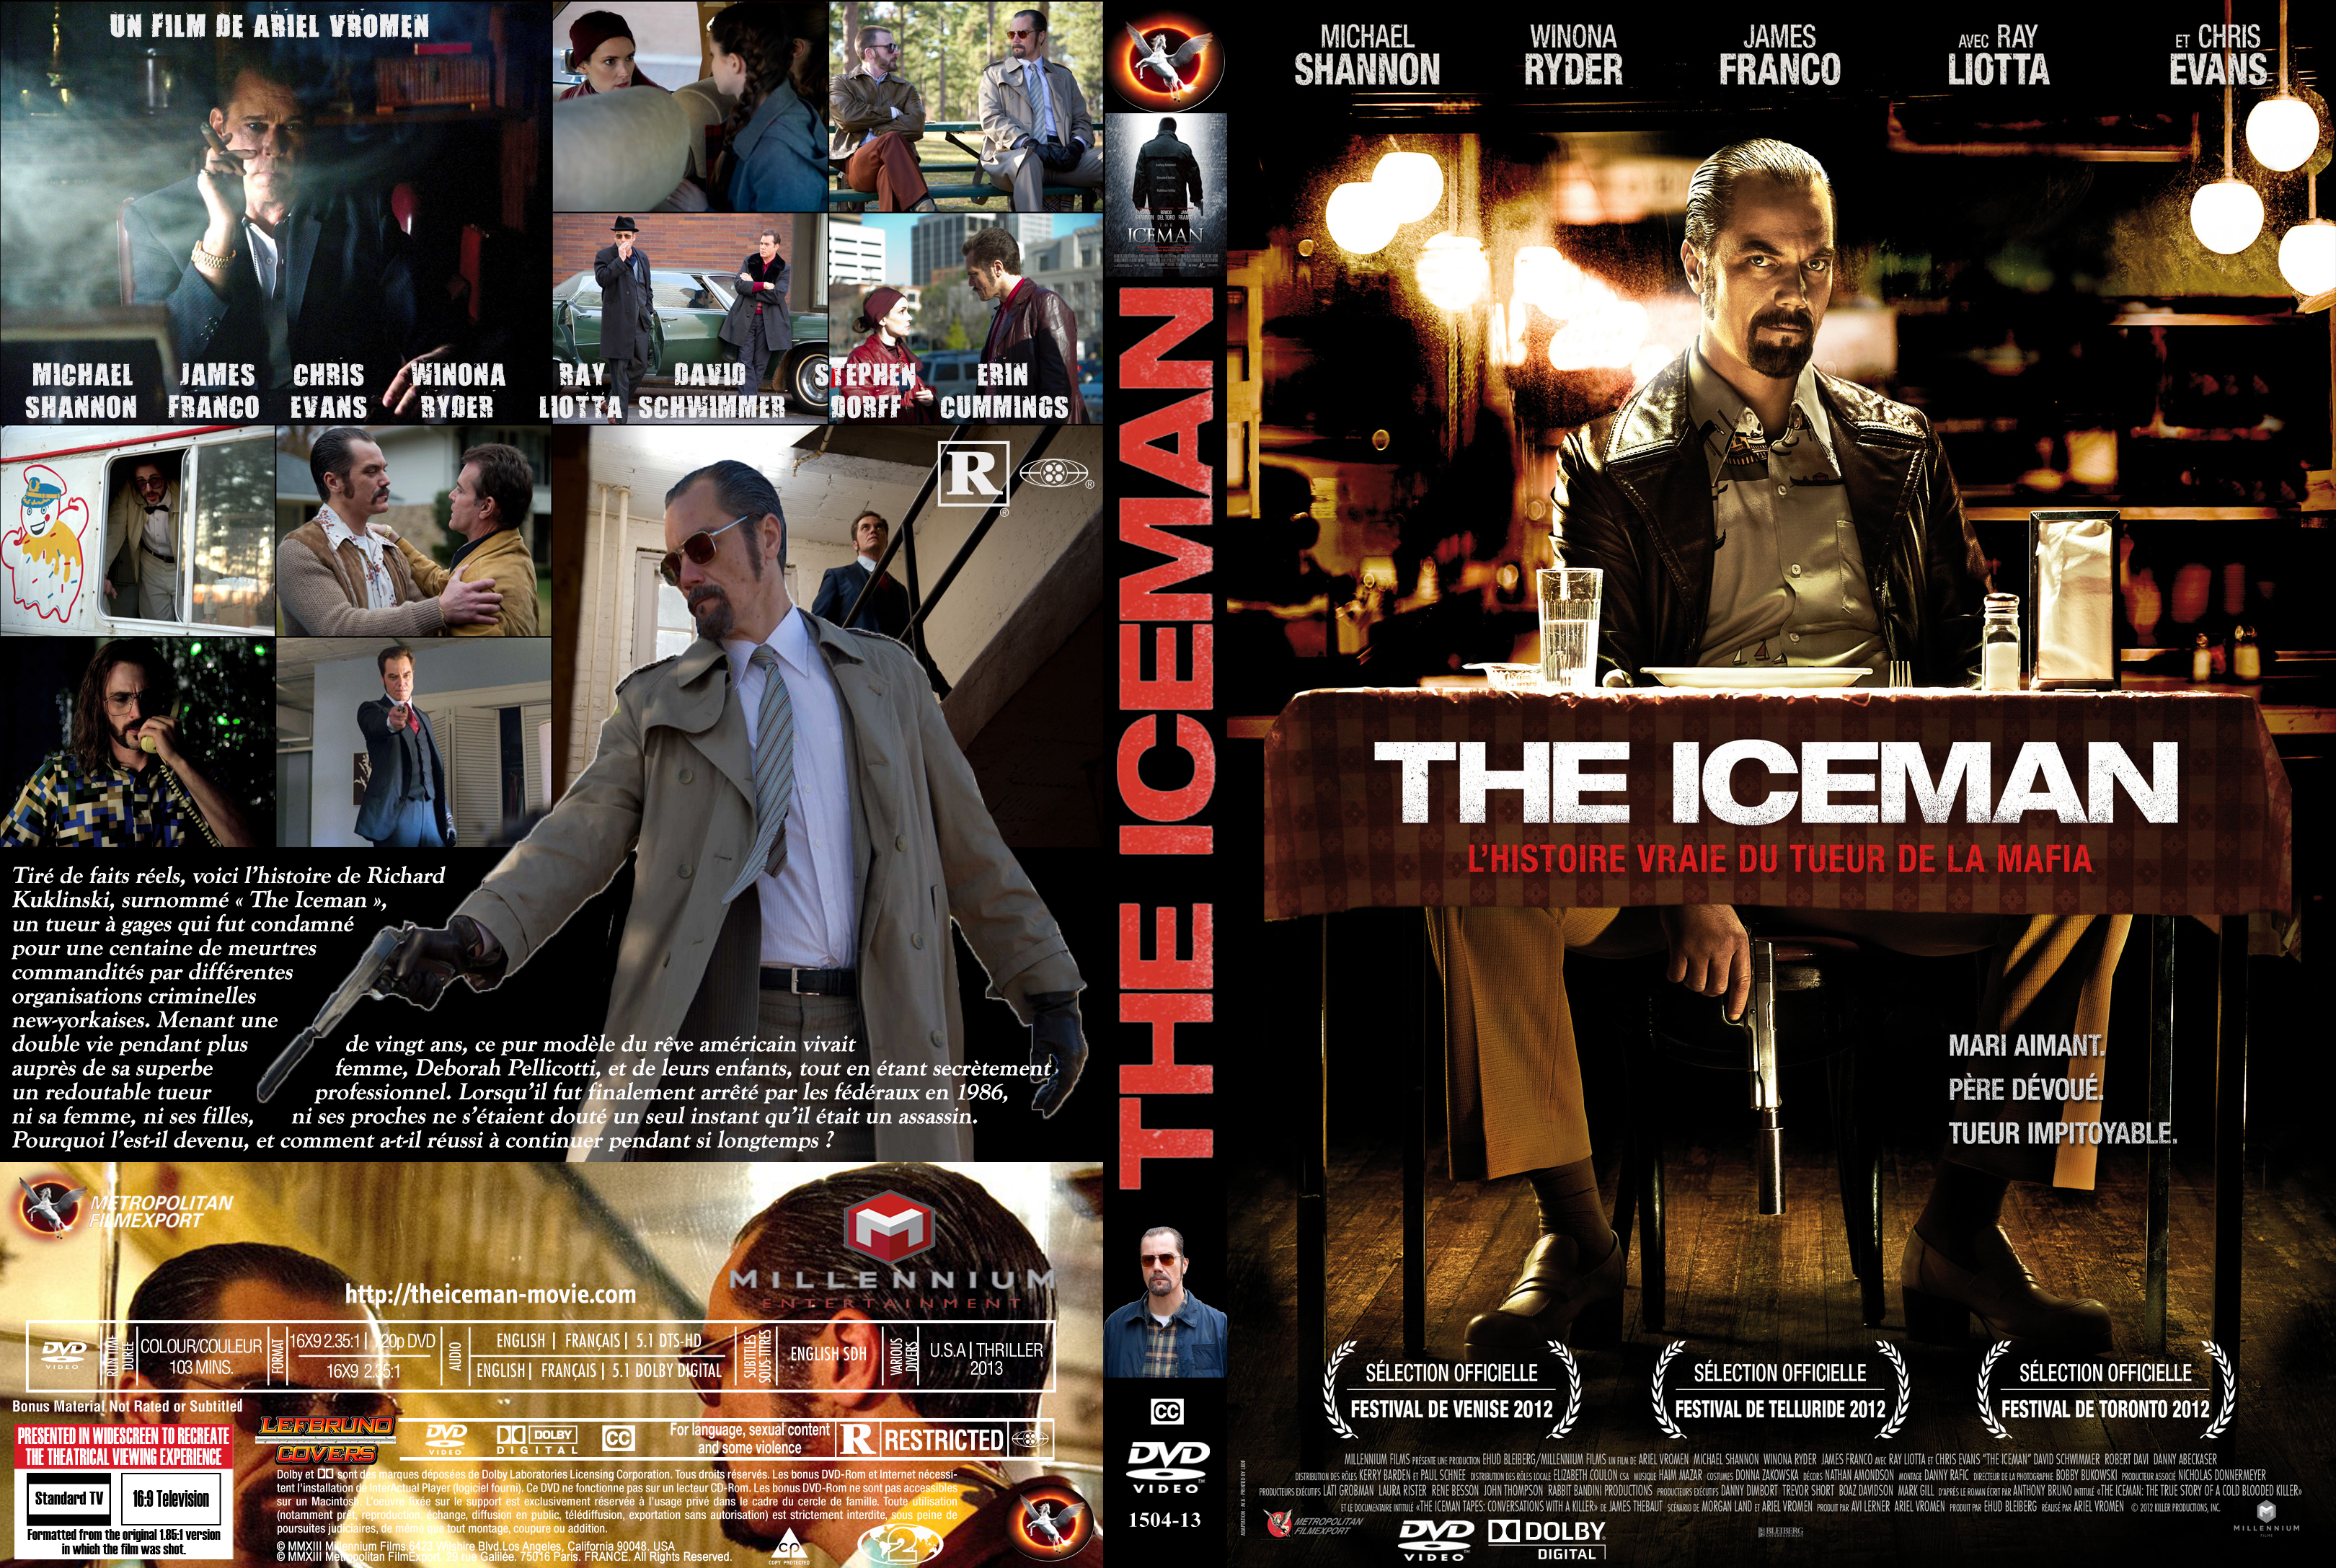 Jaquette DVD The Iceman custom